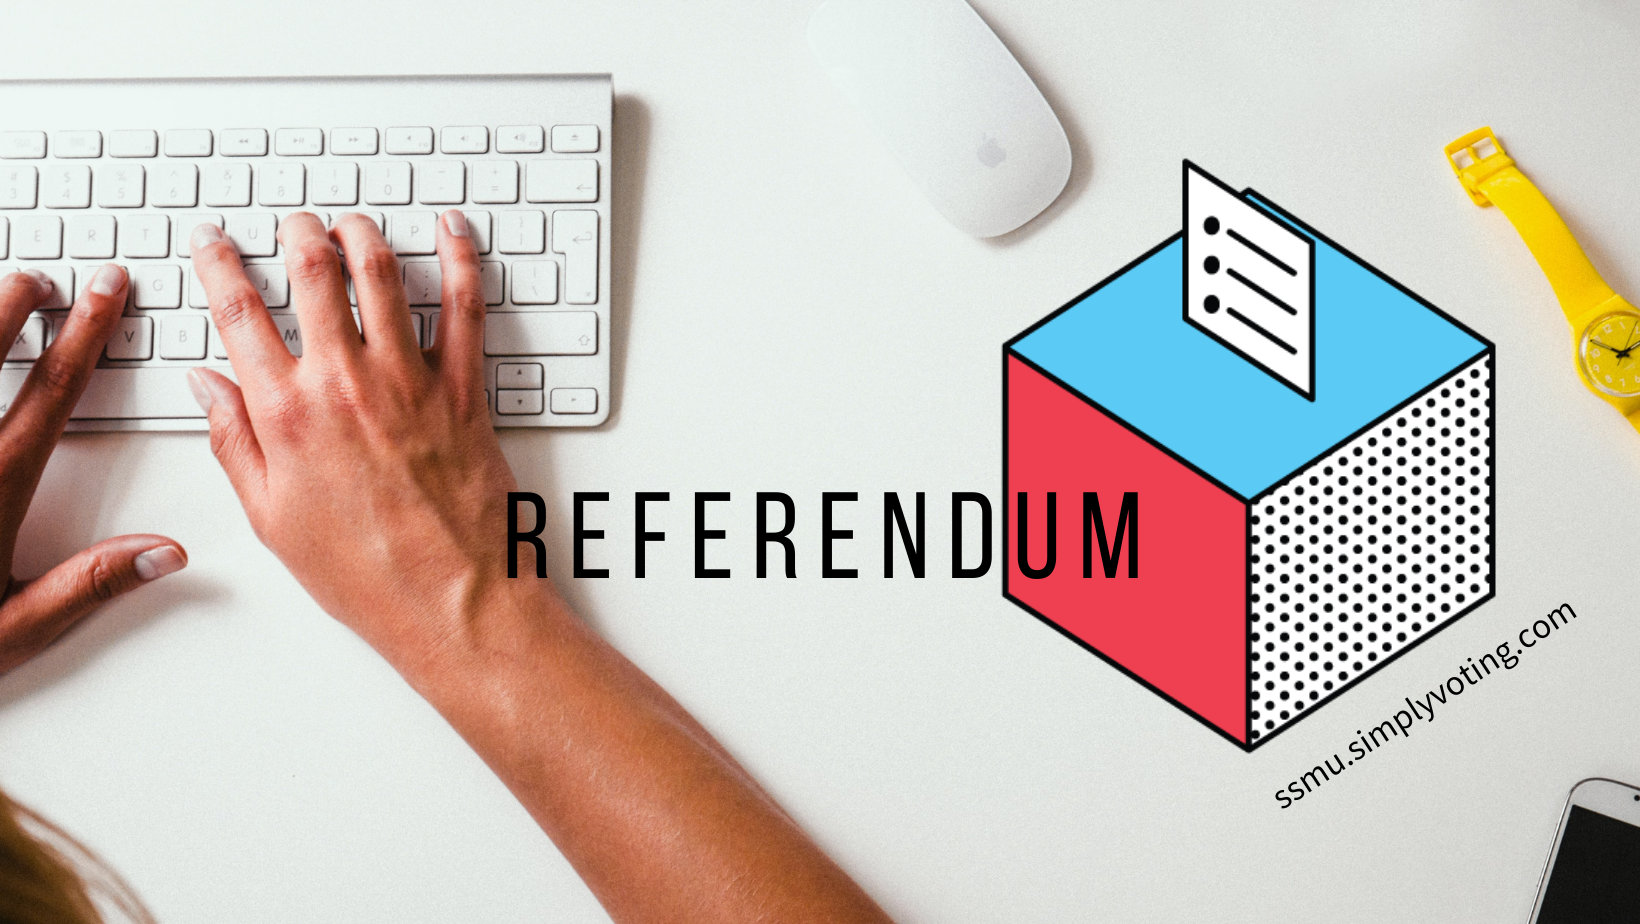 Fall 2021 Referendum voting period